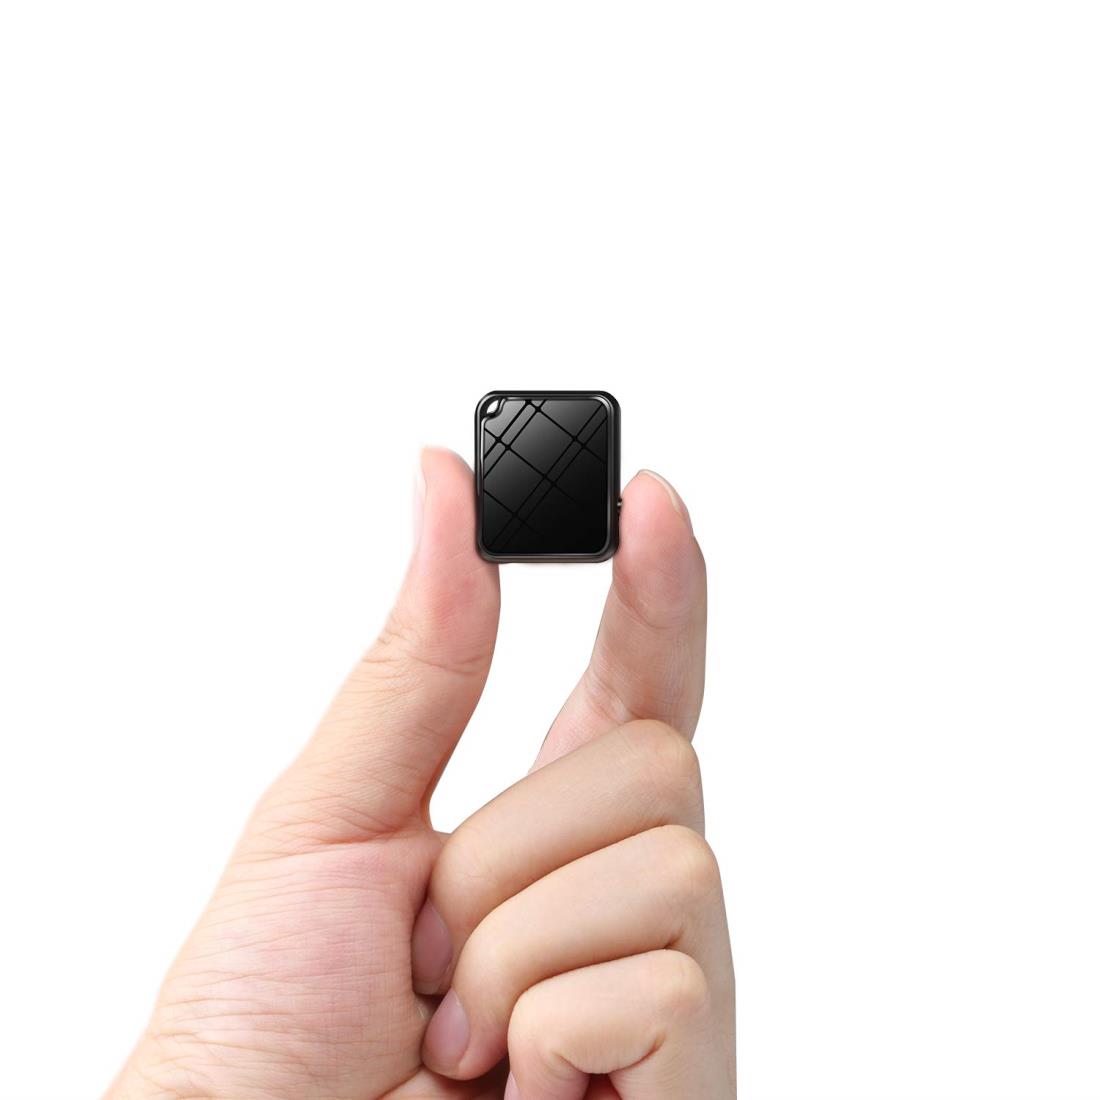 QZT ボイス レコーダー 超小型 ICレコーダー ICボイス レコーダー 録音機 8GB大容量 超軽量 50時間連続録音 超遠距離録音 HDノイズリダクション 音声検知 ワンタッチ録音 多機能 大容量 簡単操作 携帯便利 双曲面 Windows/Mac/android/iphone対応可